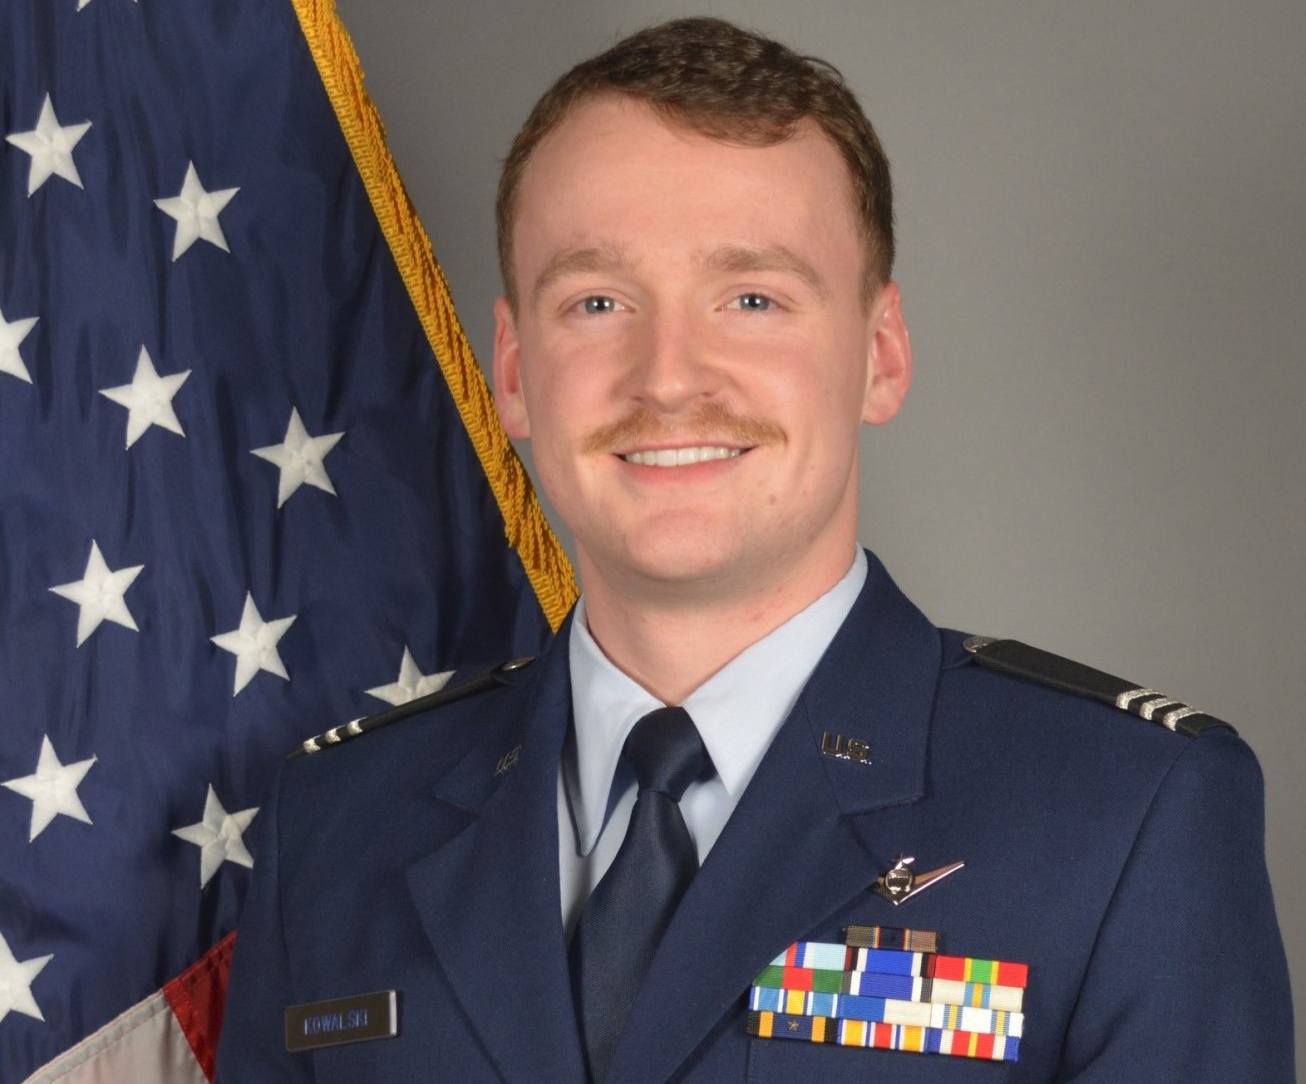 Nicholas Kowalski wearing his Air Force uniform